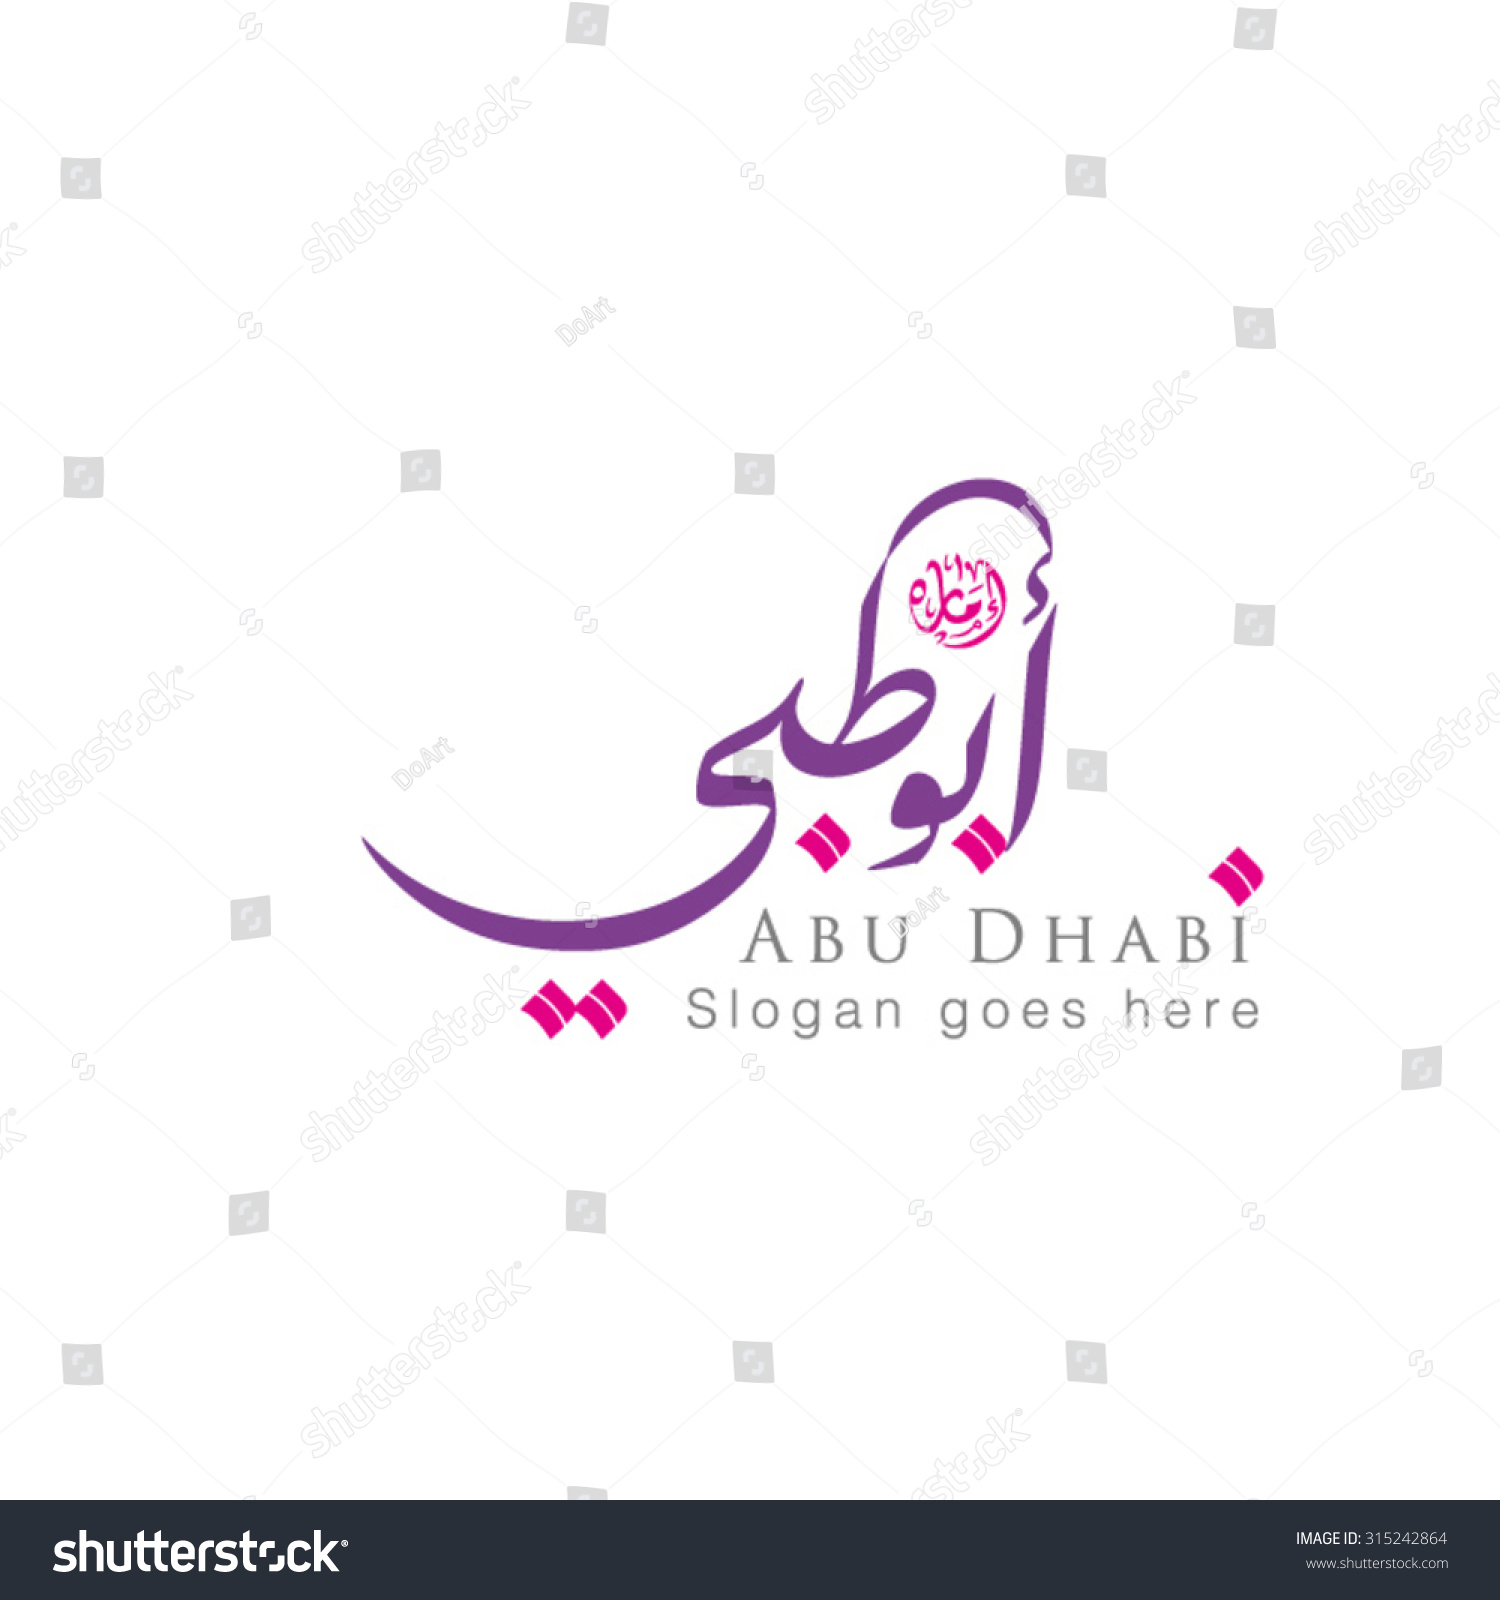 Abu Dhabi Arabic Calligraphy Can Be Stock Vector 315242864 - Shutterstock